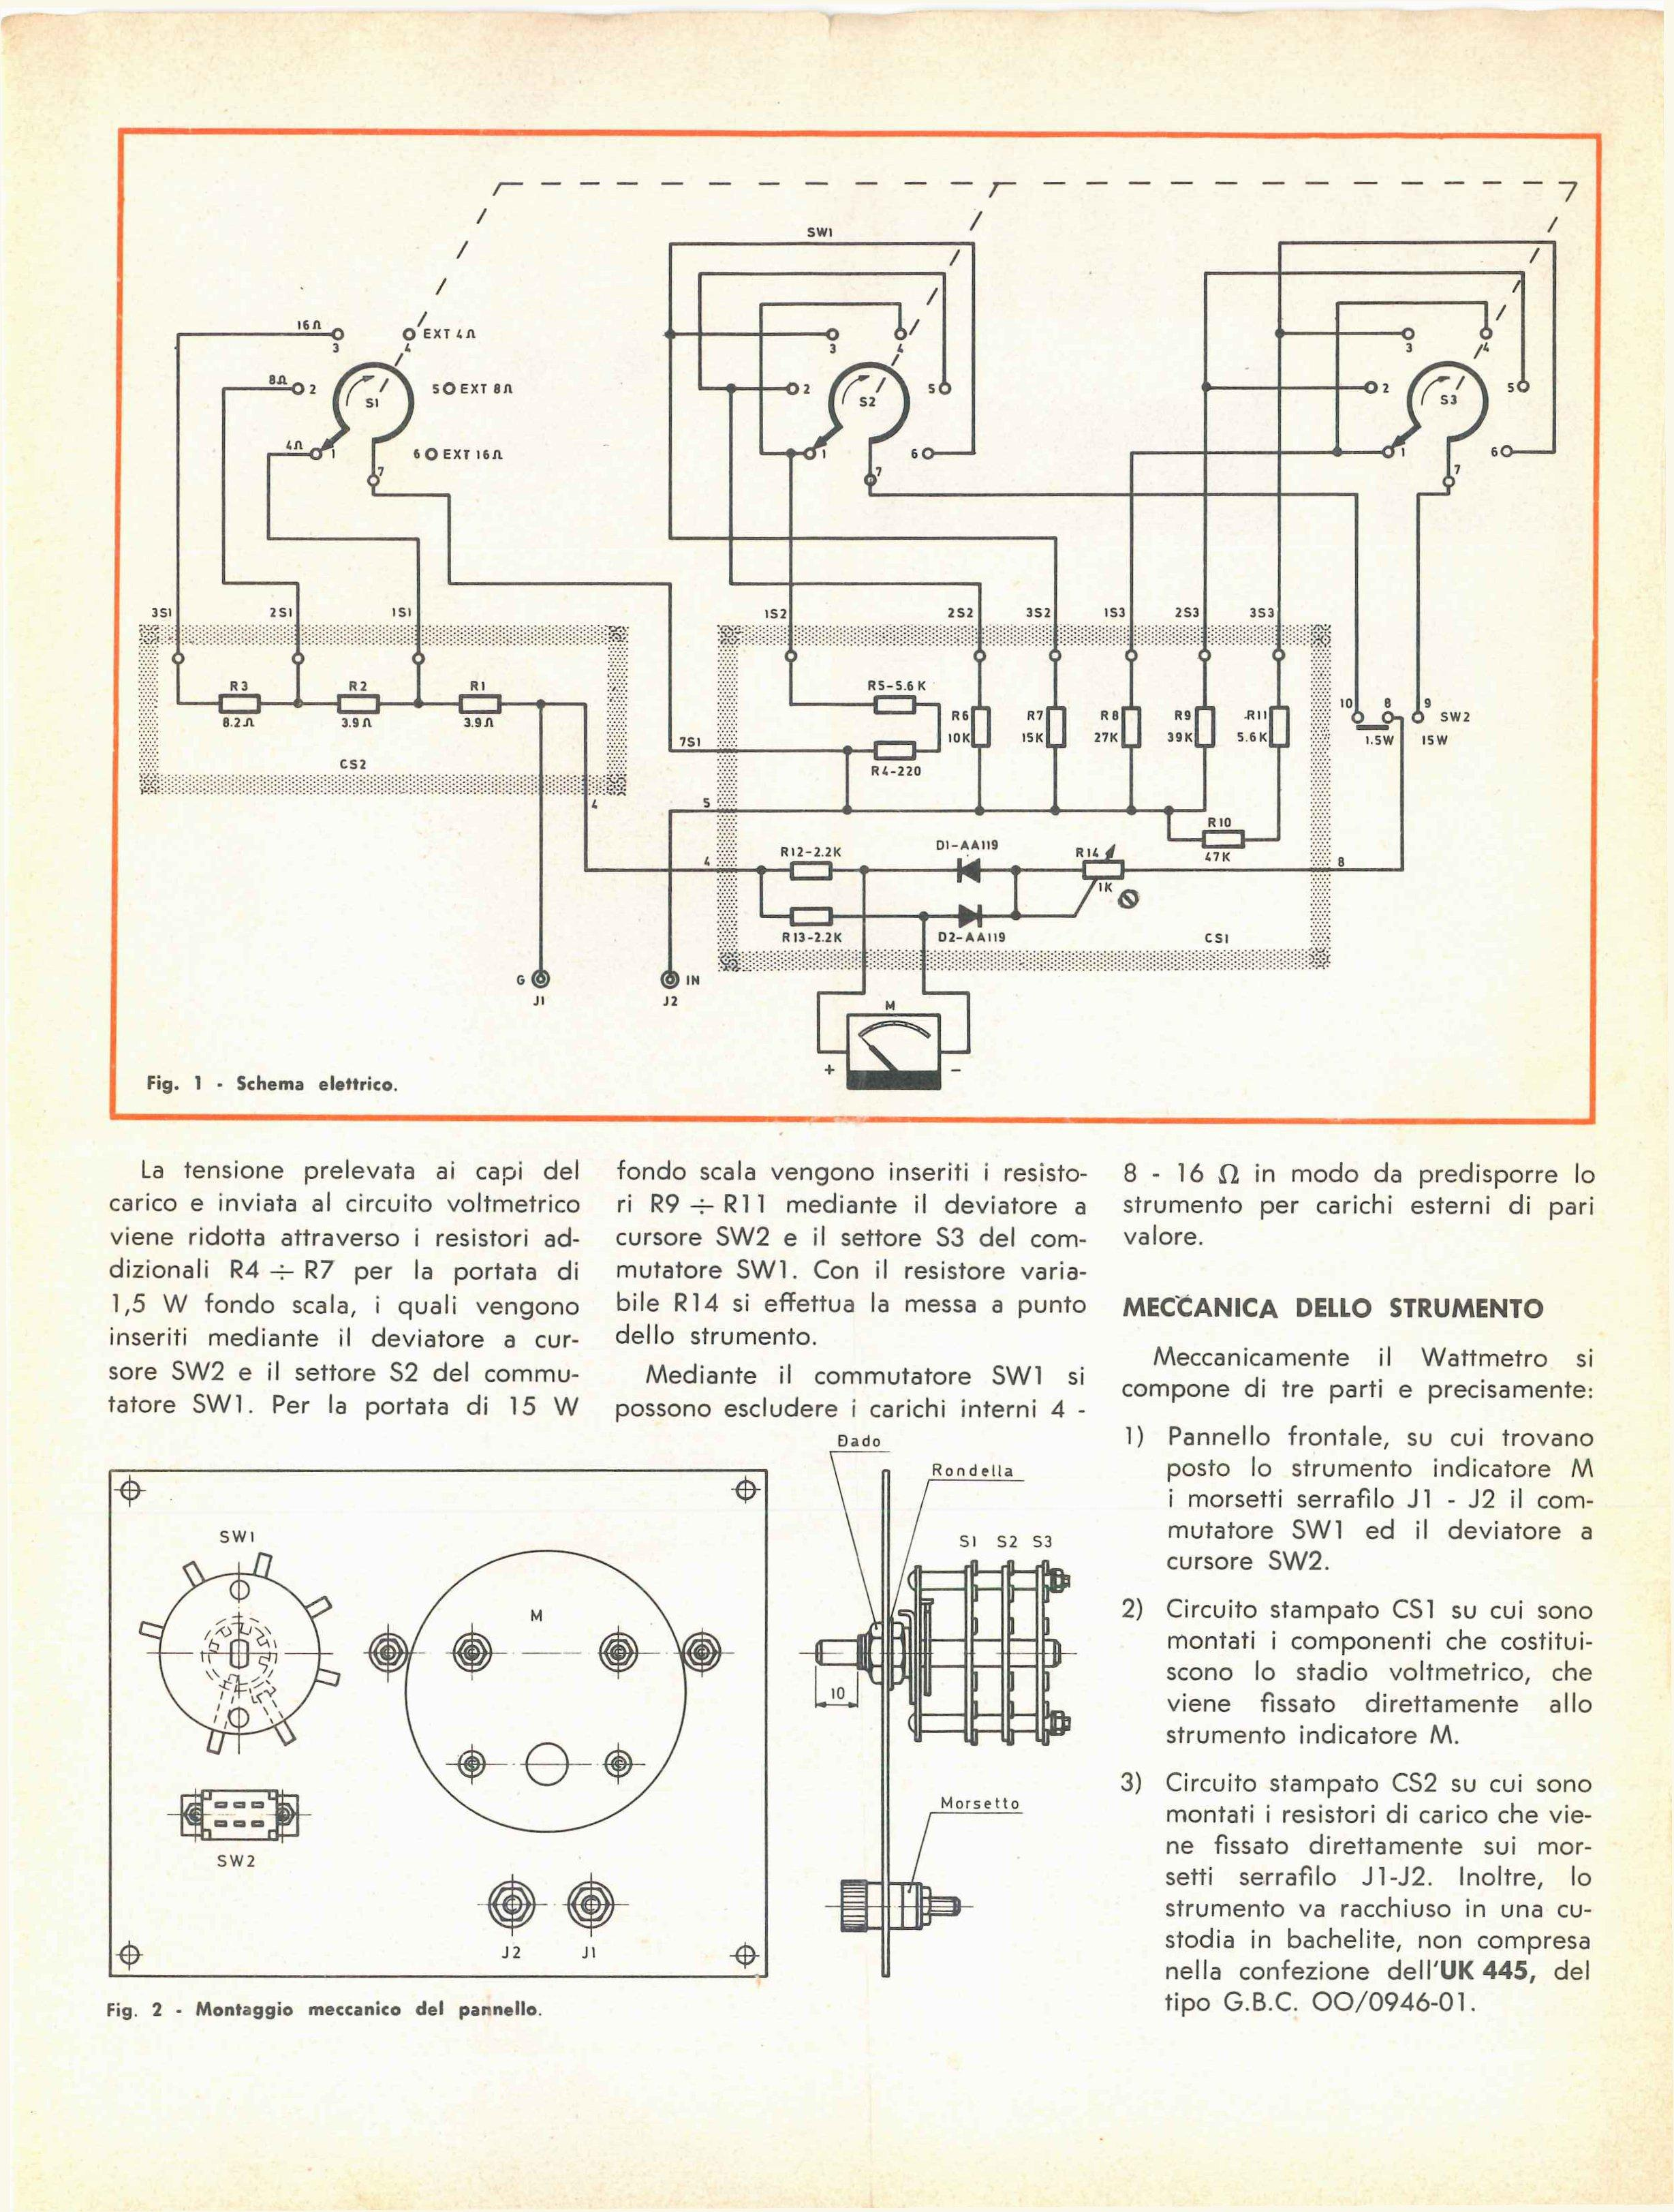 Fig. 1 Schema elettrico.